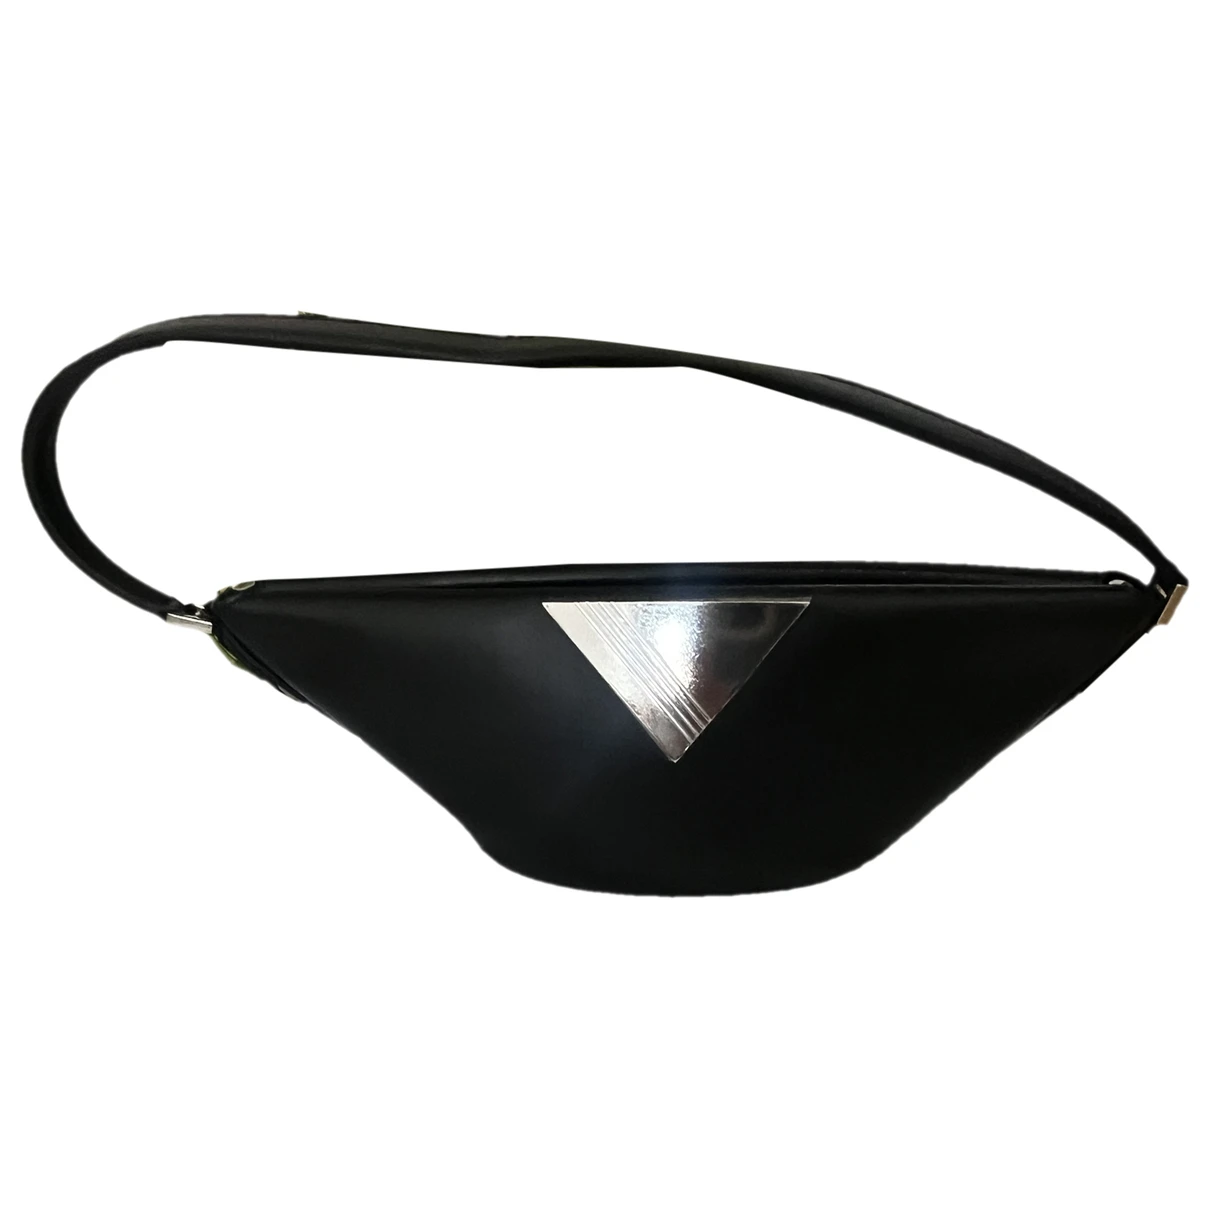 Pre-owned Attico Leather Handbag In Black